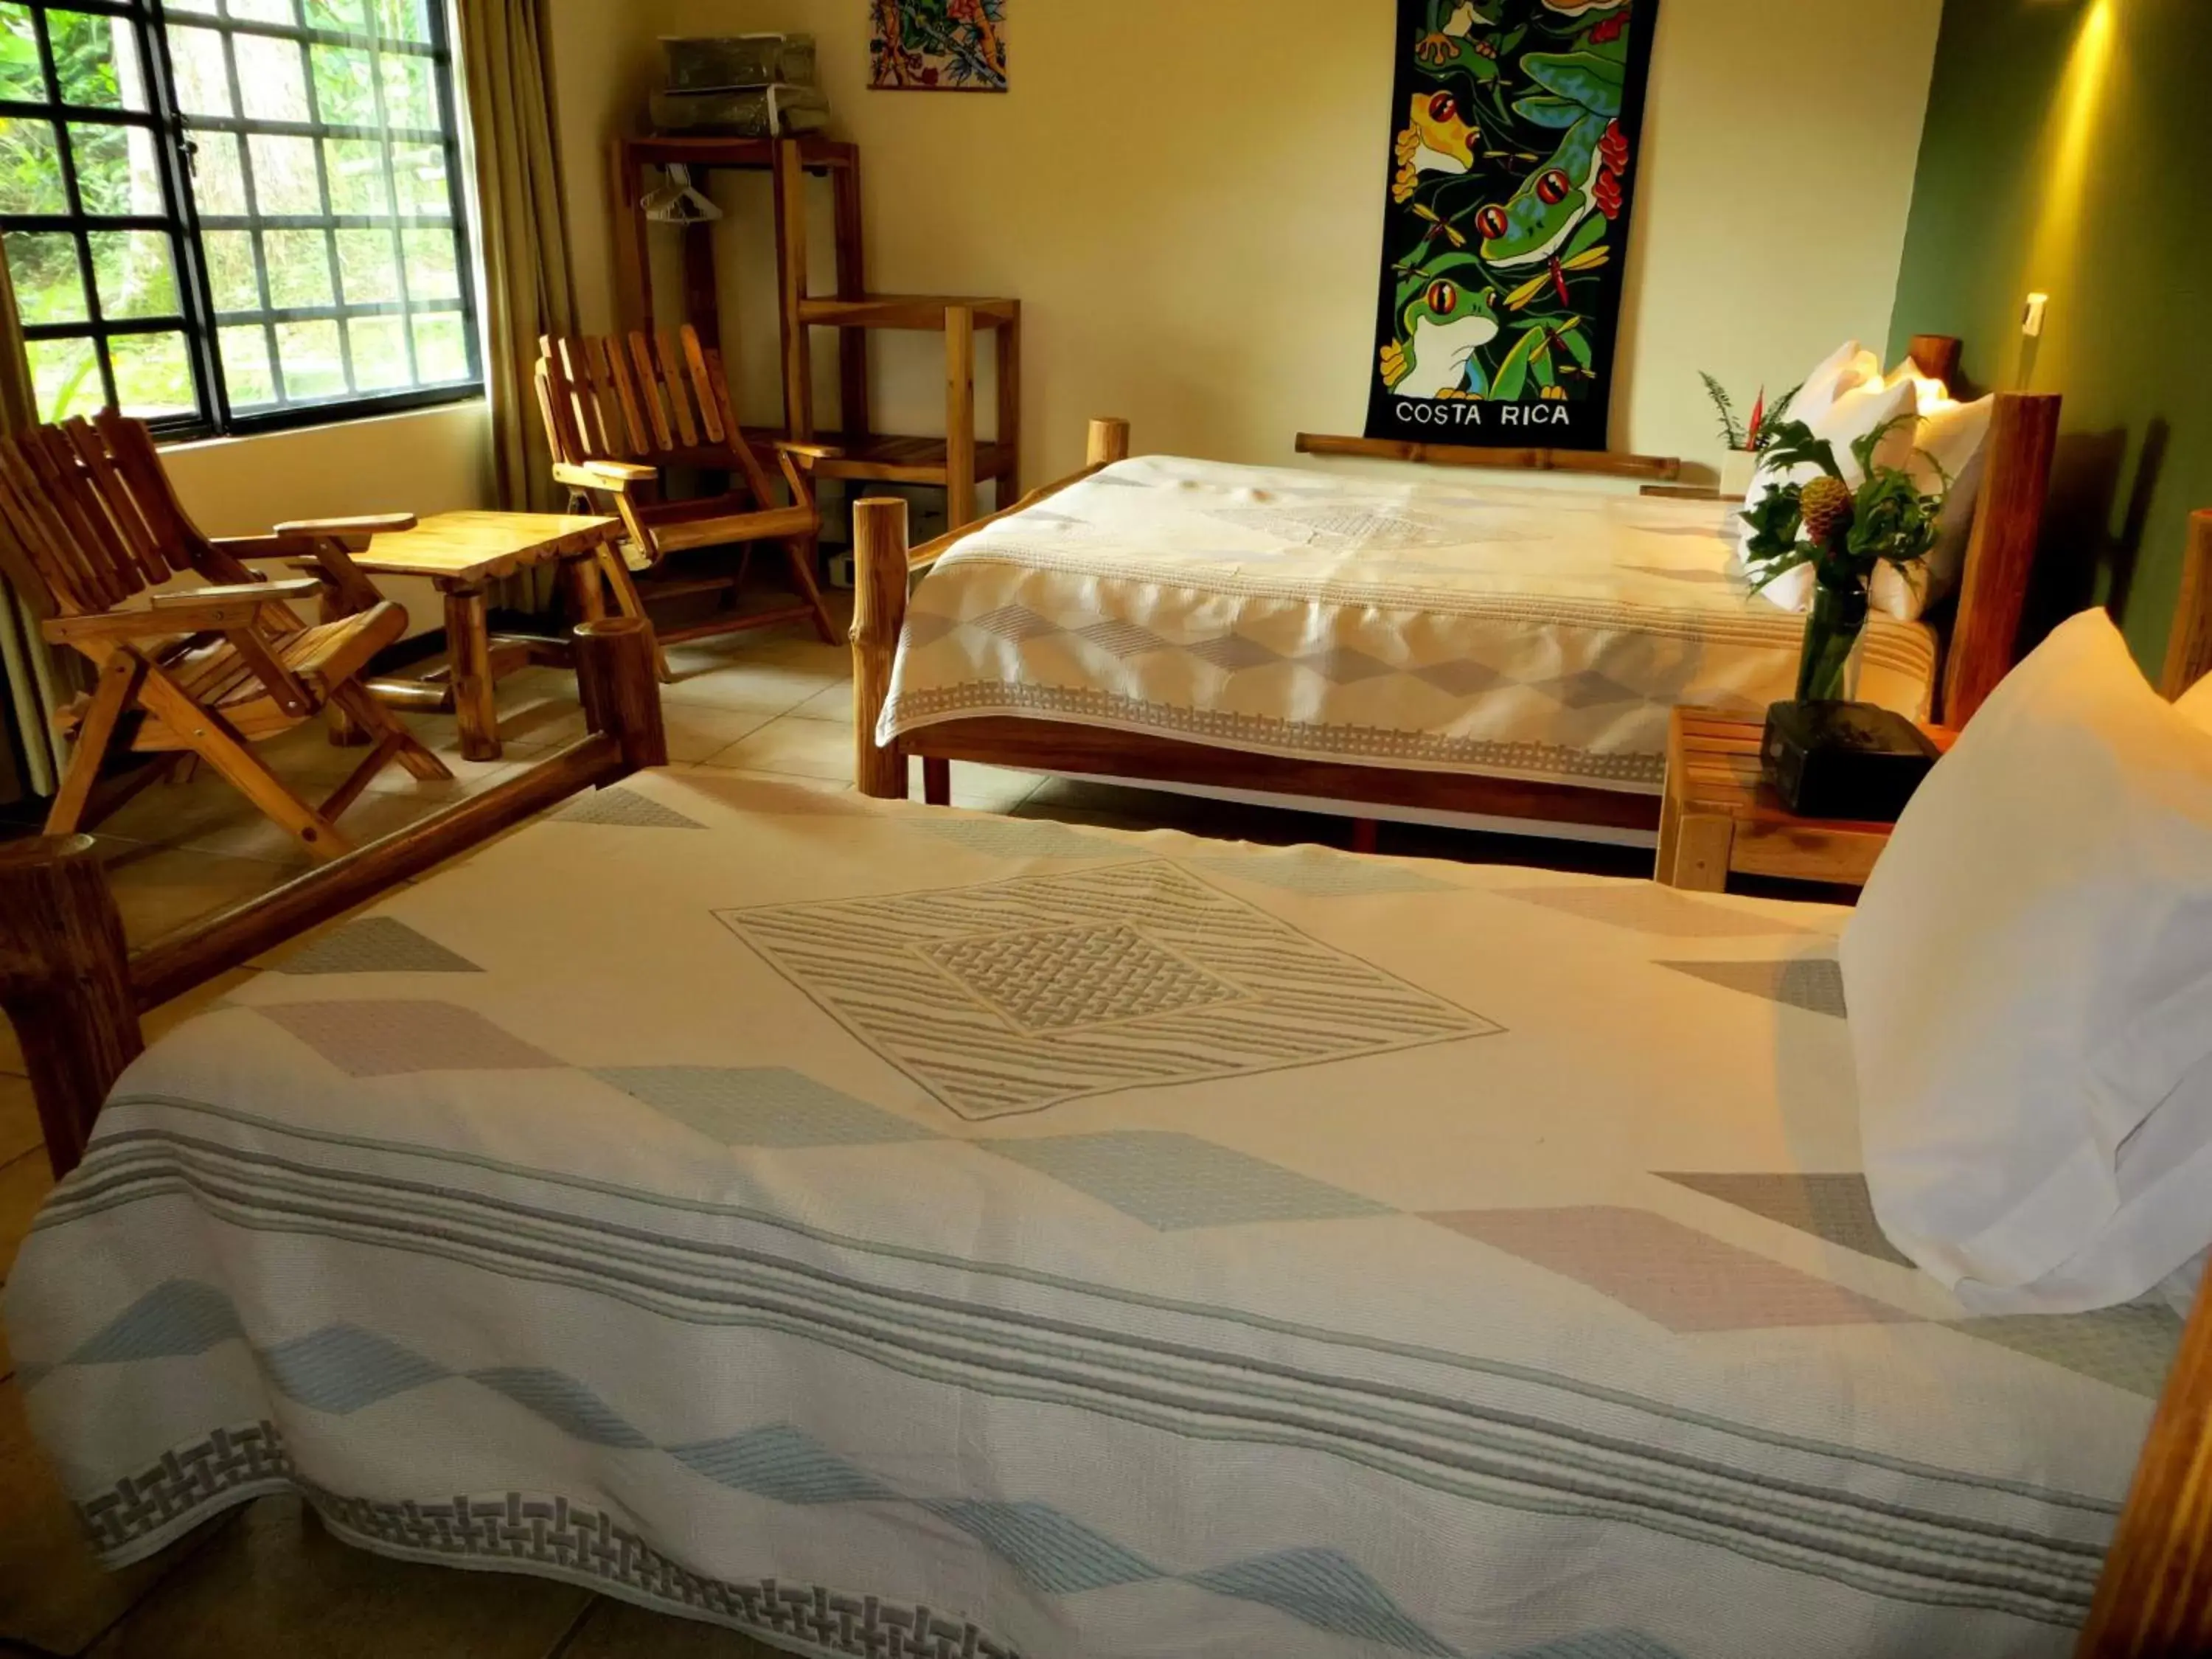 Decorative detail, Bed in Pura Vida Hotel